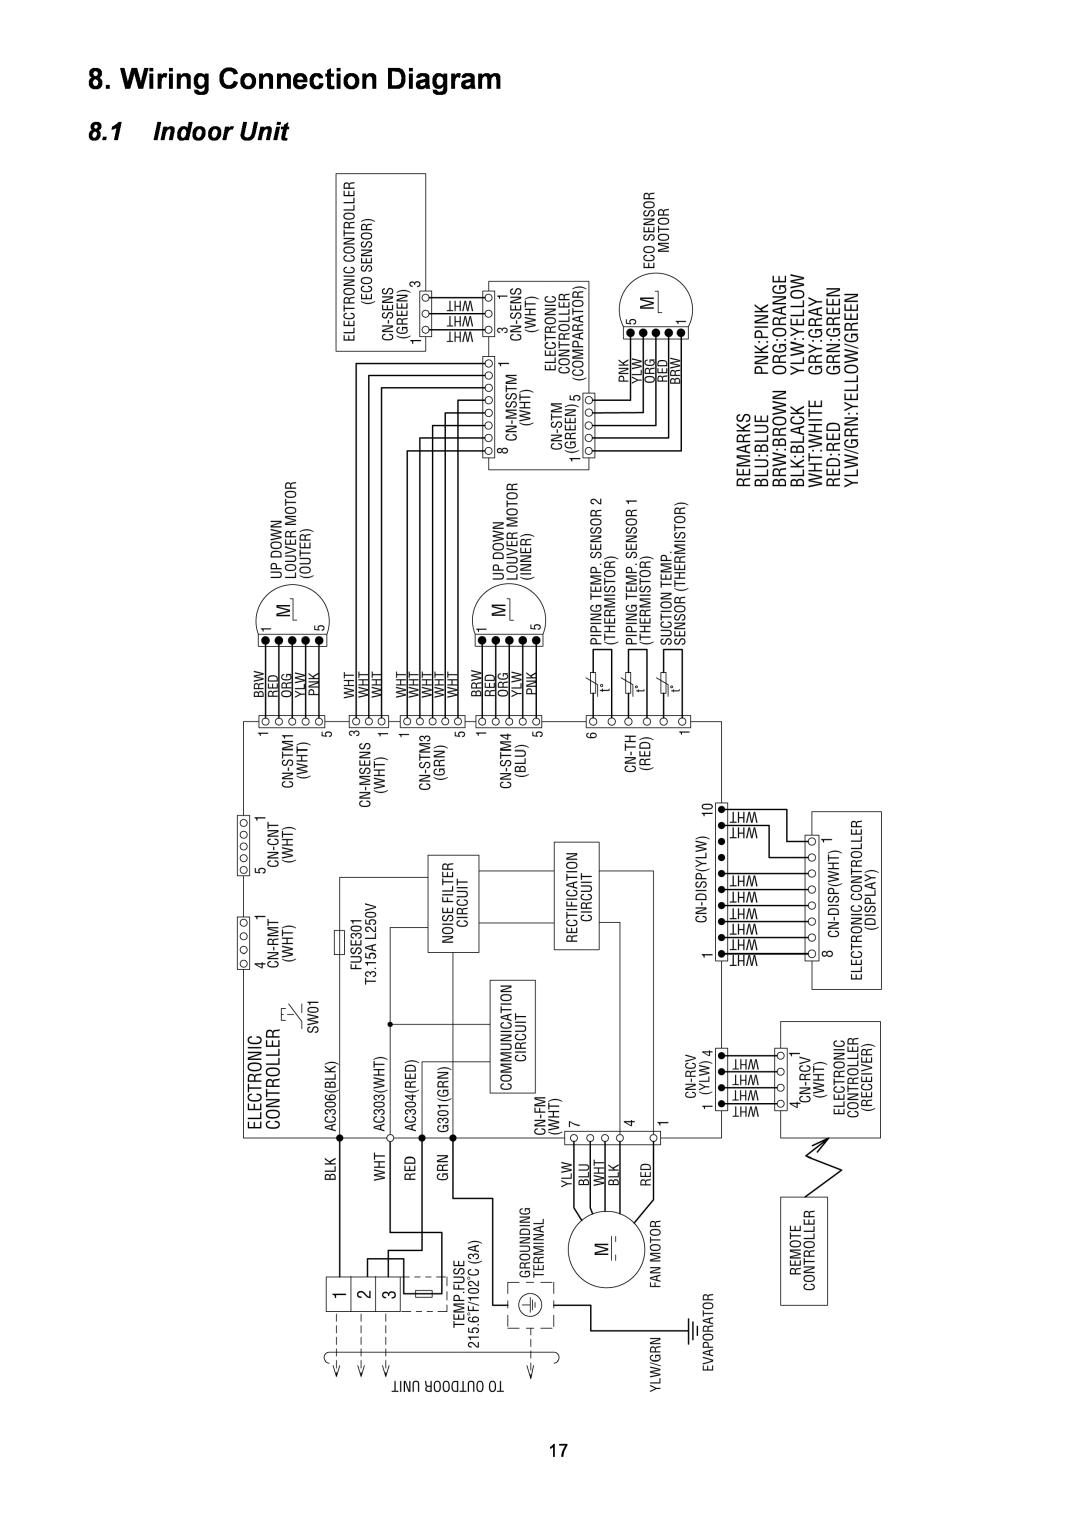 Panasonic CS-XE9PKUA, CS-XE12PKUA, CU-XE9PKUA, CU-XE12PKUA manual Wiring Connection Diagram, 8.1Indoor Unit 